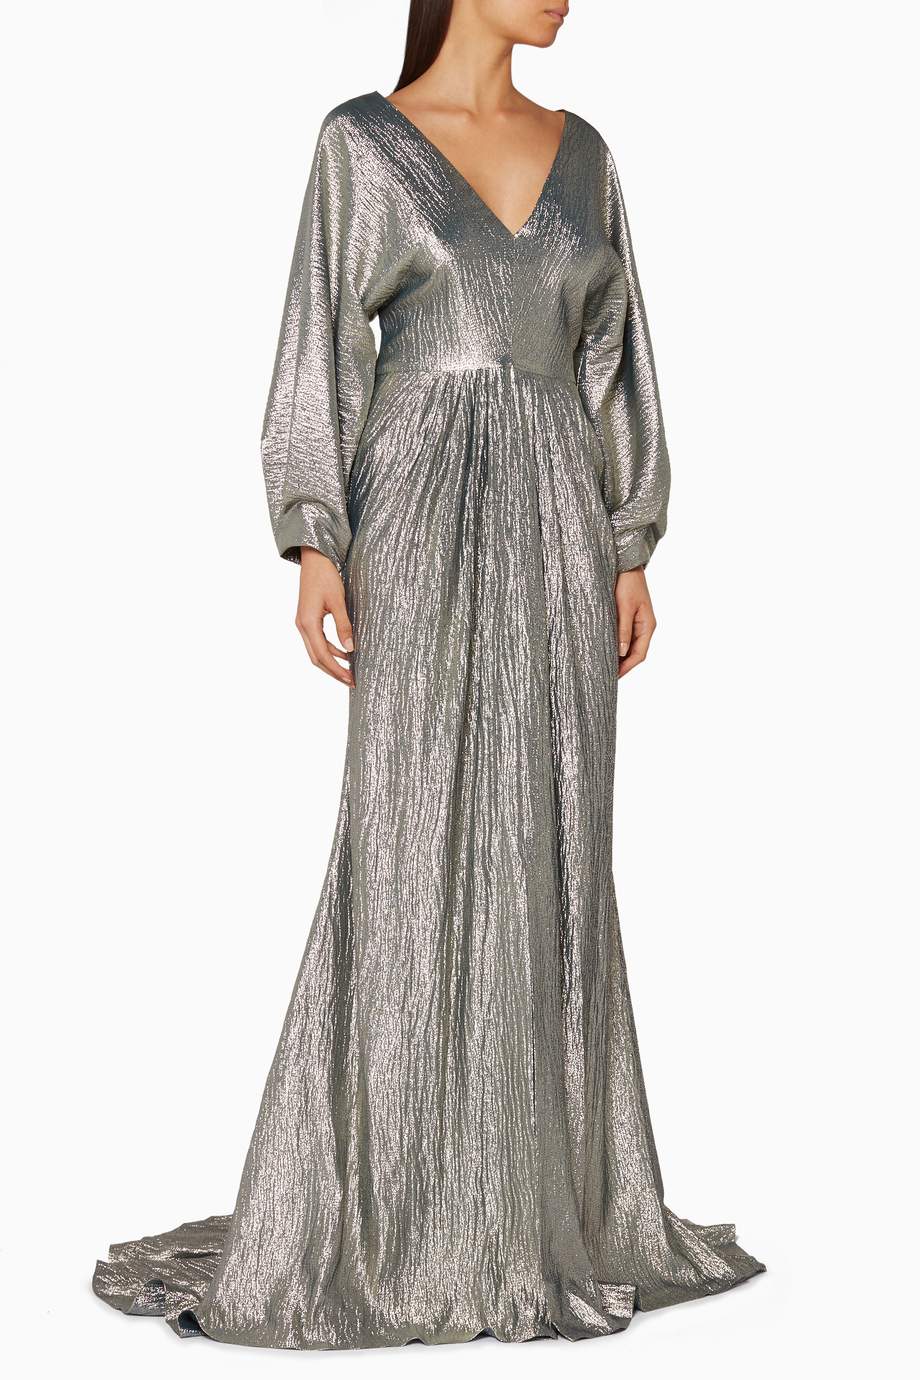 Shop Elizabeth Kennedy Gold Gold Lamé Batwing Gown for Women | Ounass Saudi